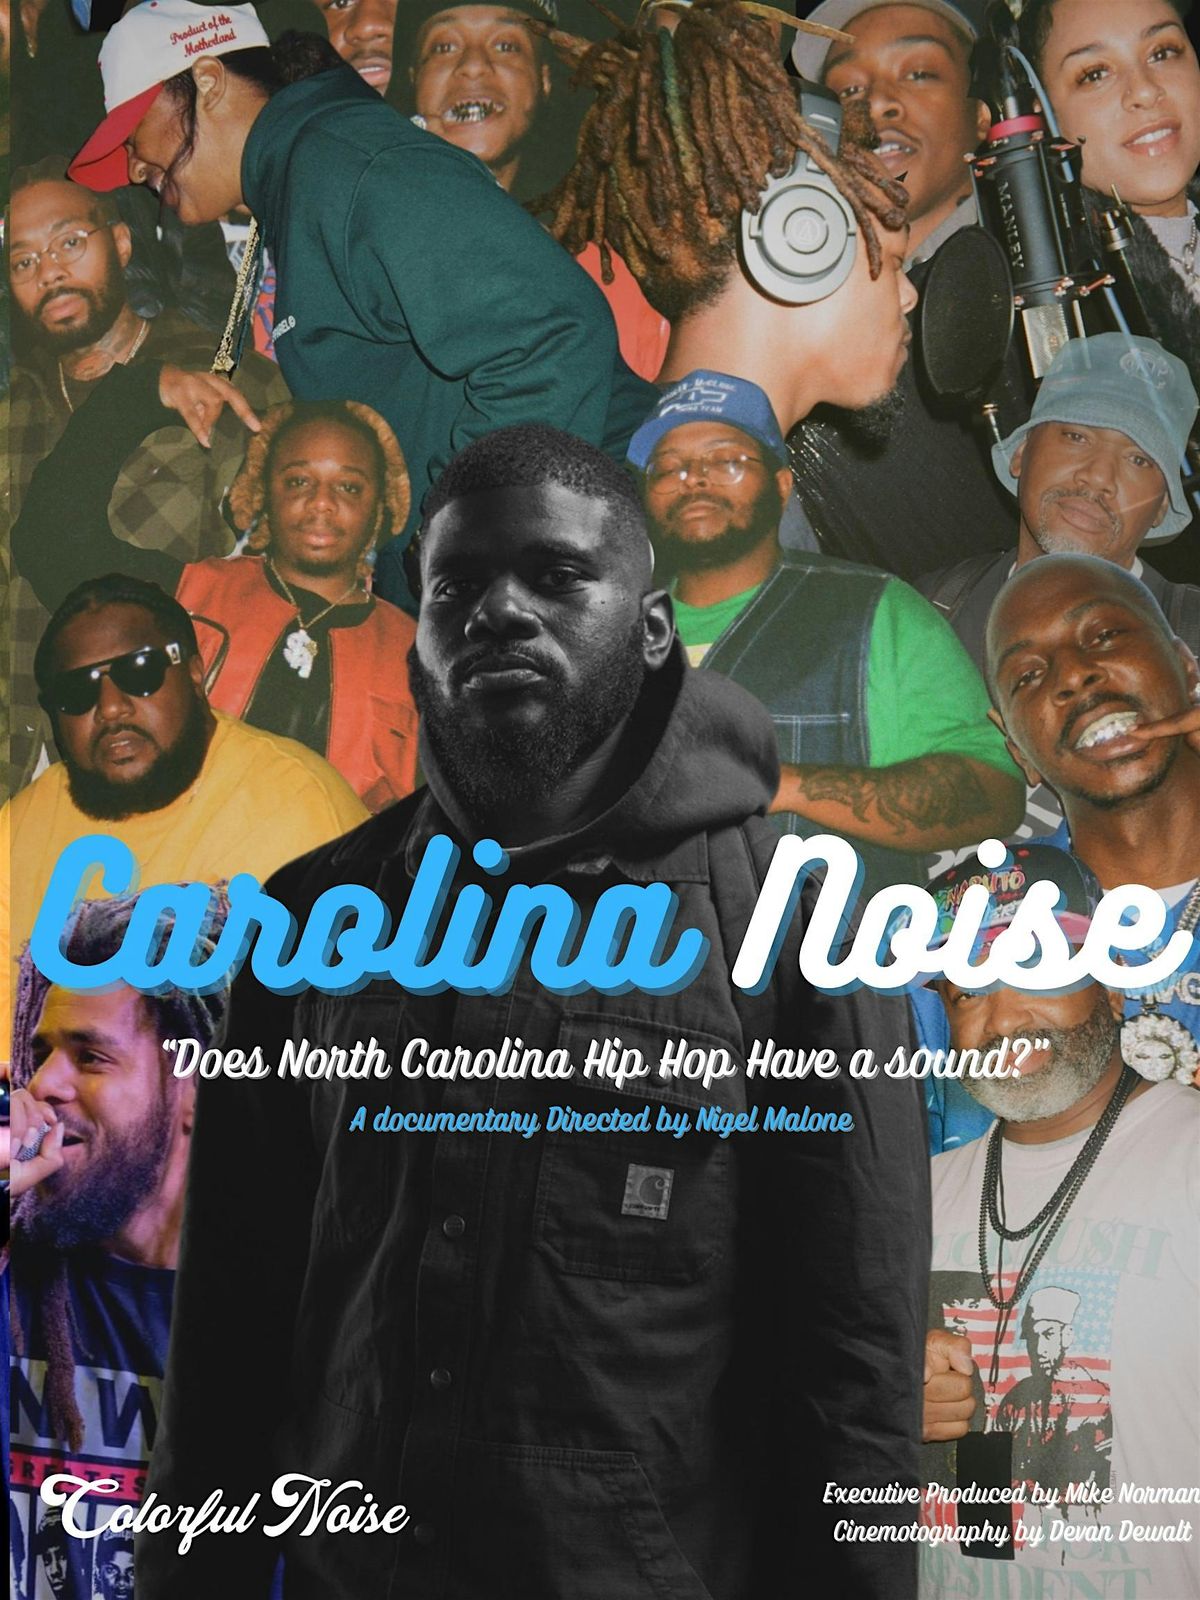 Carolina Noise: Documentary Screening